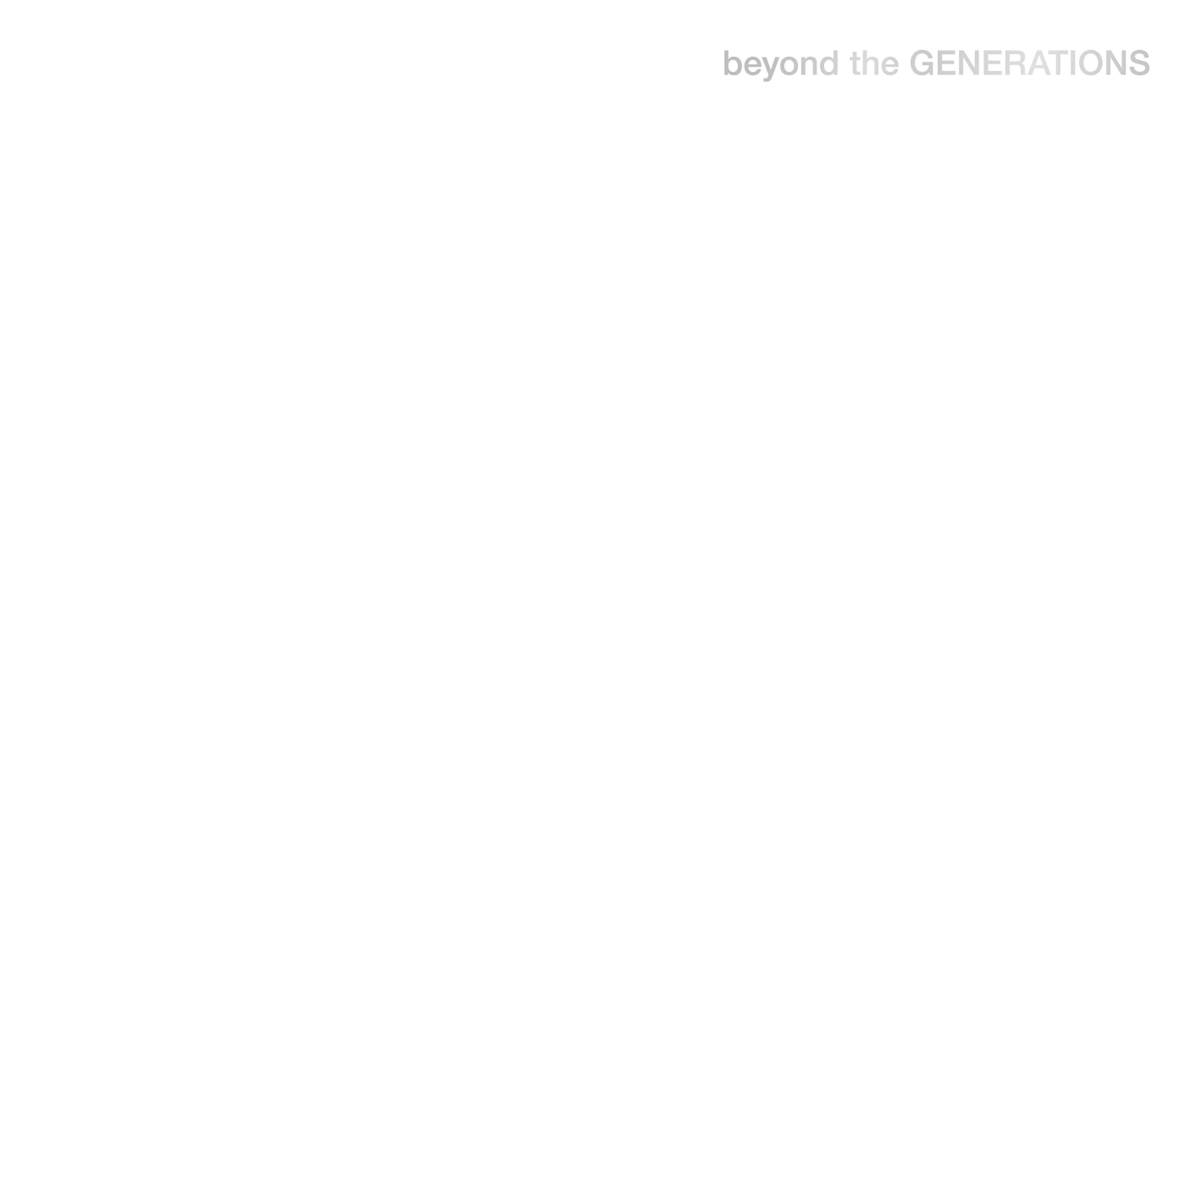 「GENERATIONS LIVE TOUR 2023 “THE BEST“」「GENERATIONS LIVE TOUR 2023 ”THE STORY”」と、
2つのツアーを開催するGENERATIONSの初のミニアルバム。

Blu-ray Discにはミュージックビデオや"D.U.N.K. Showcase DAY3 ©NTV"のパフォーマンス映像を収録。